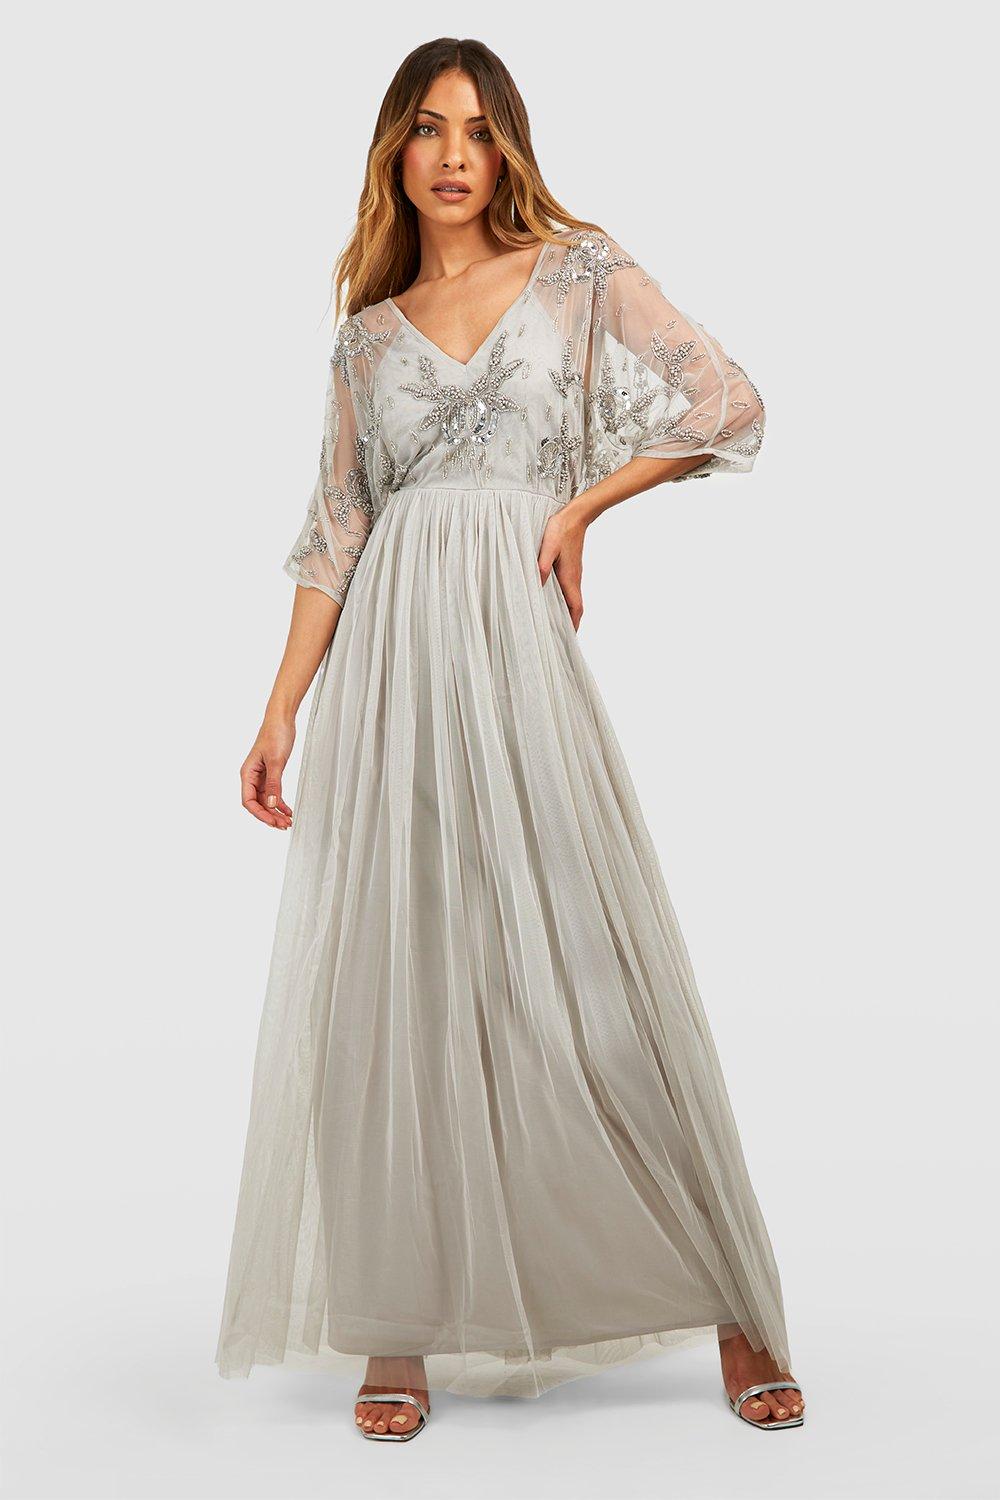 Edwardian Evening Gowns, Ballgowns, Formal Dresses Womens Bridesmaid Hand Embellished Kimono Mesh Maxi - Grey - 12 $152.00 AT vintagedancer.com